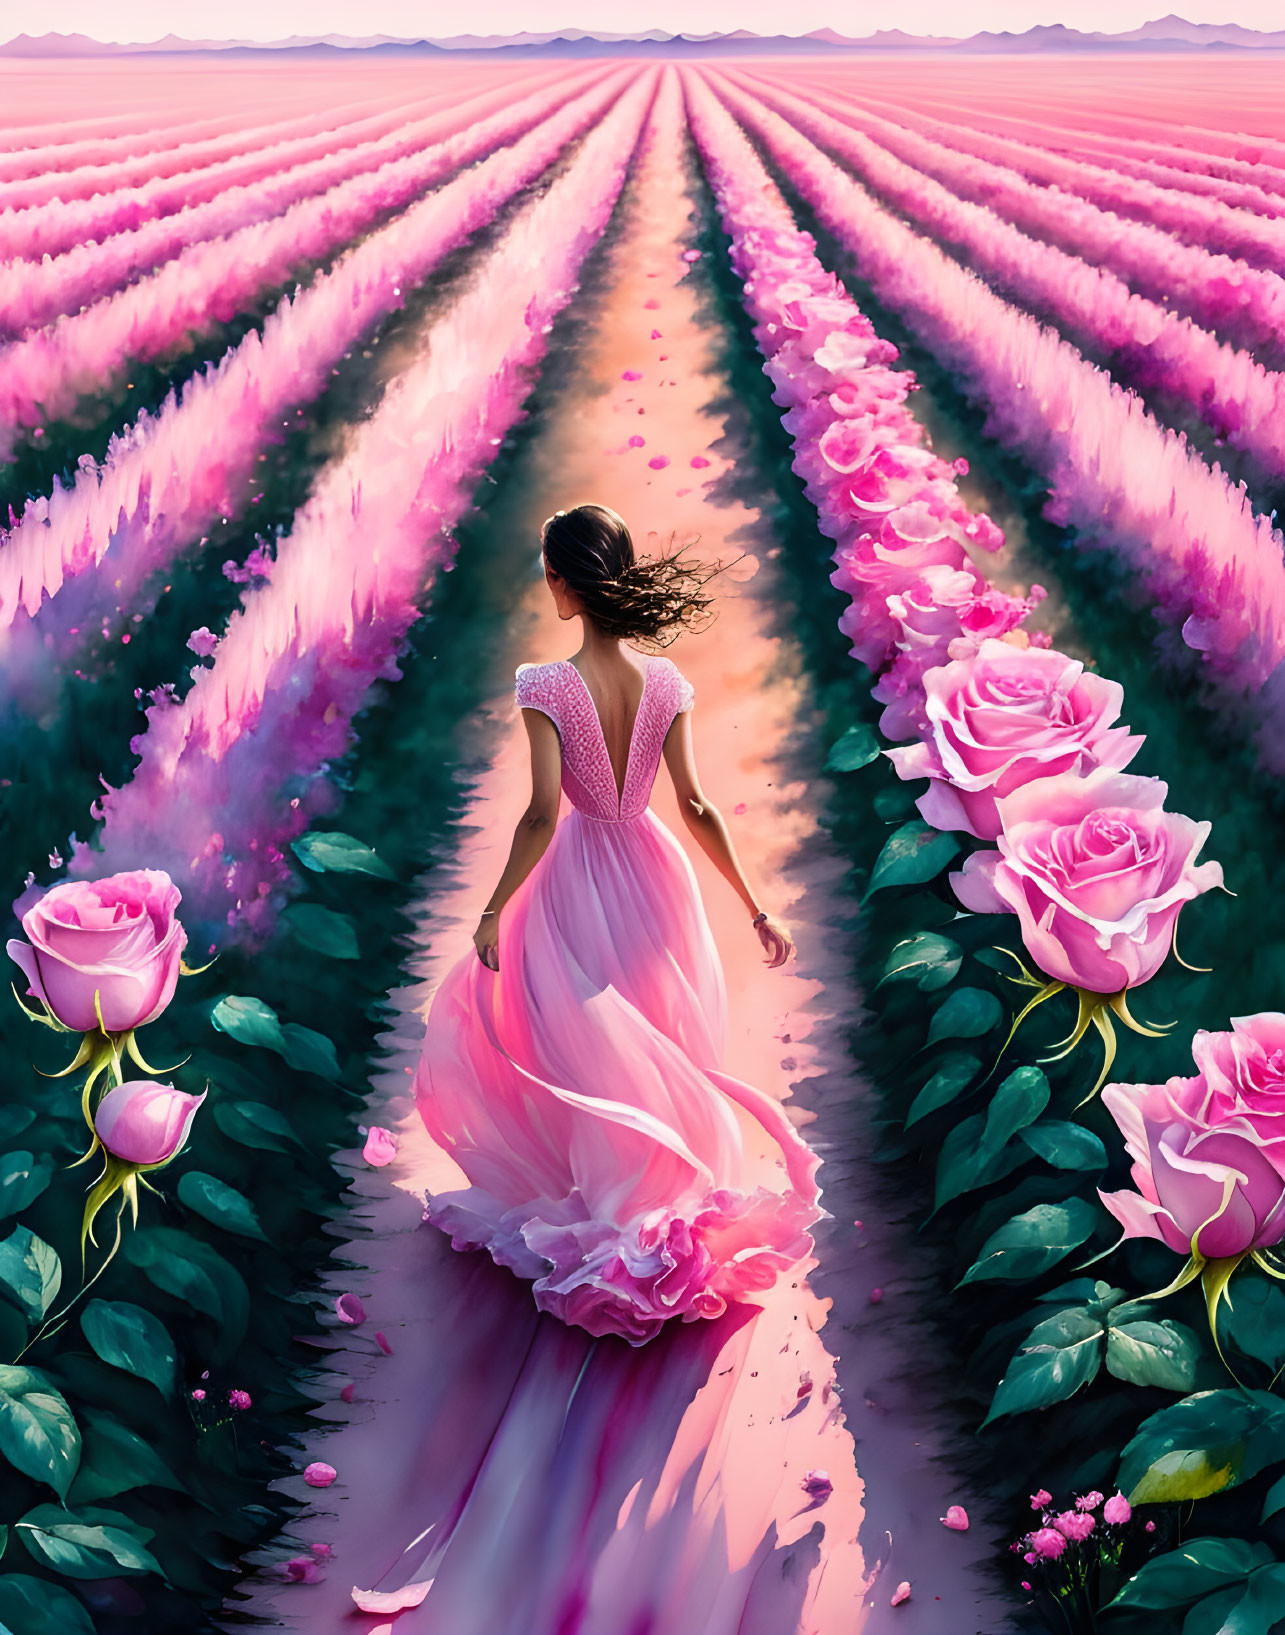 Woman in flowing pink dress walking among towering pink roses at dusk